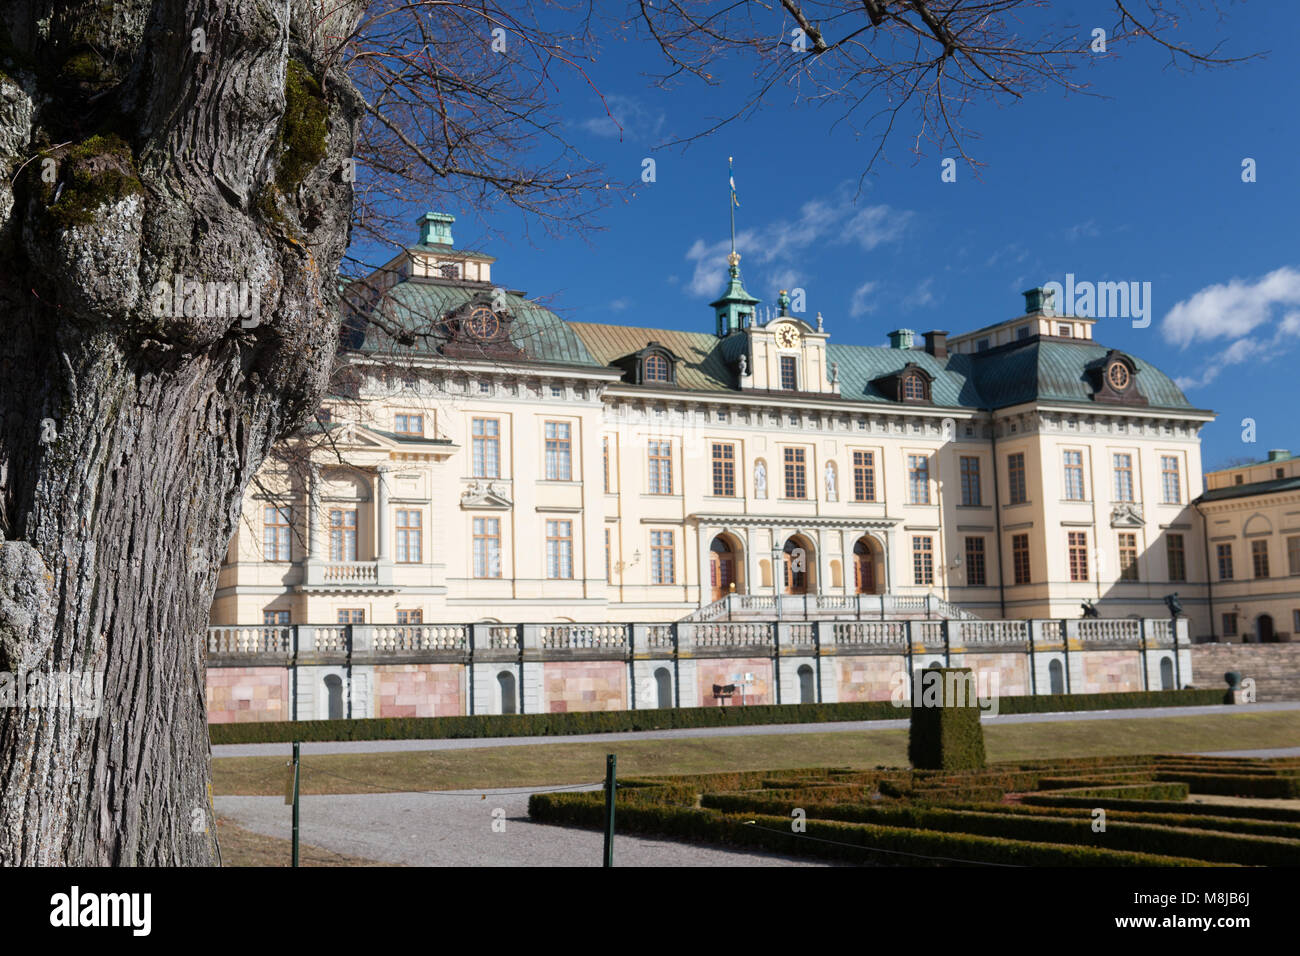 Drottningholm Palace, Drottningholms slott, Lovön (Stockholm, Sweden) Stock Photo